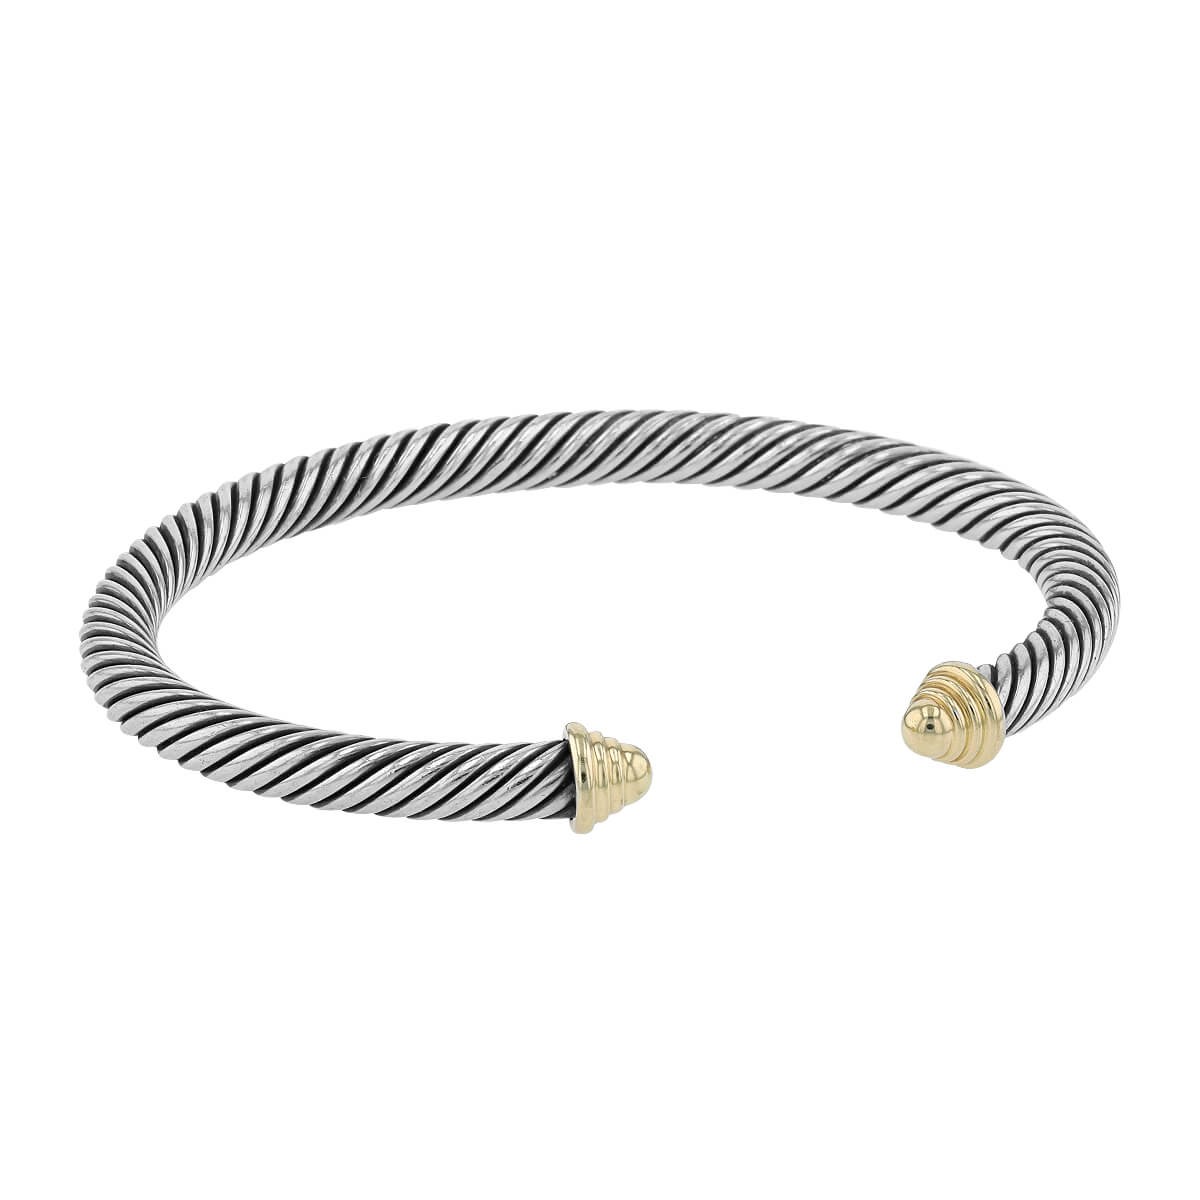 David Yurman Cable Bracelet With 14k Gold & Diamonds - Silver | Editorialist